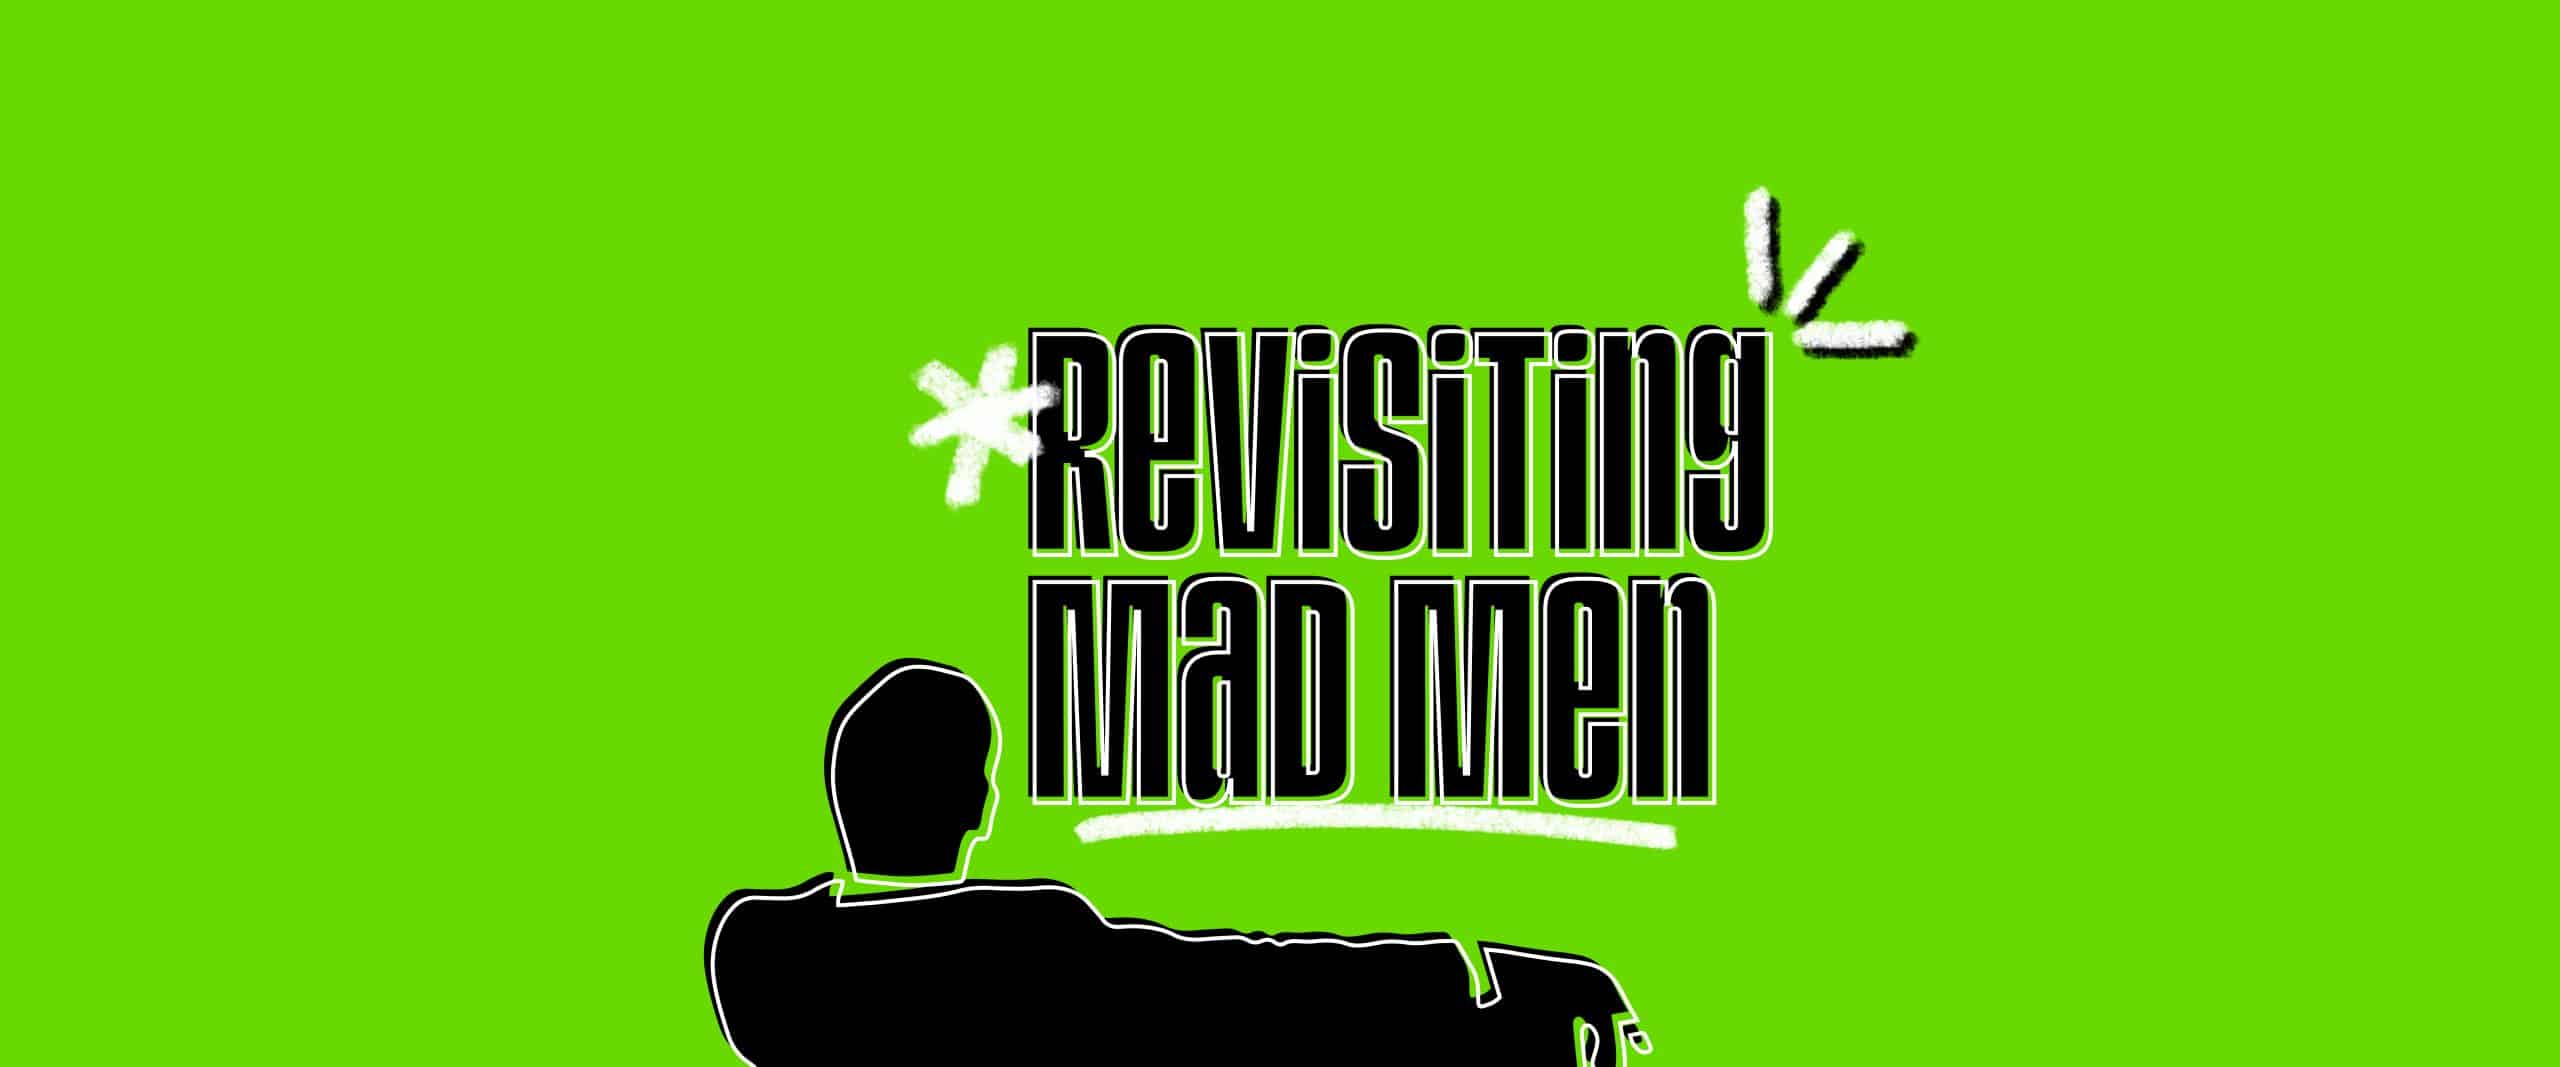 Revisiting Mad Men